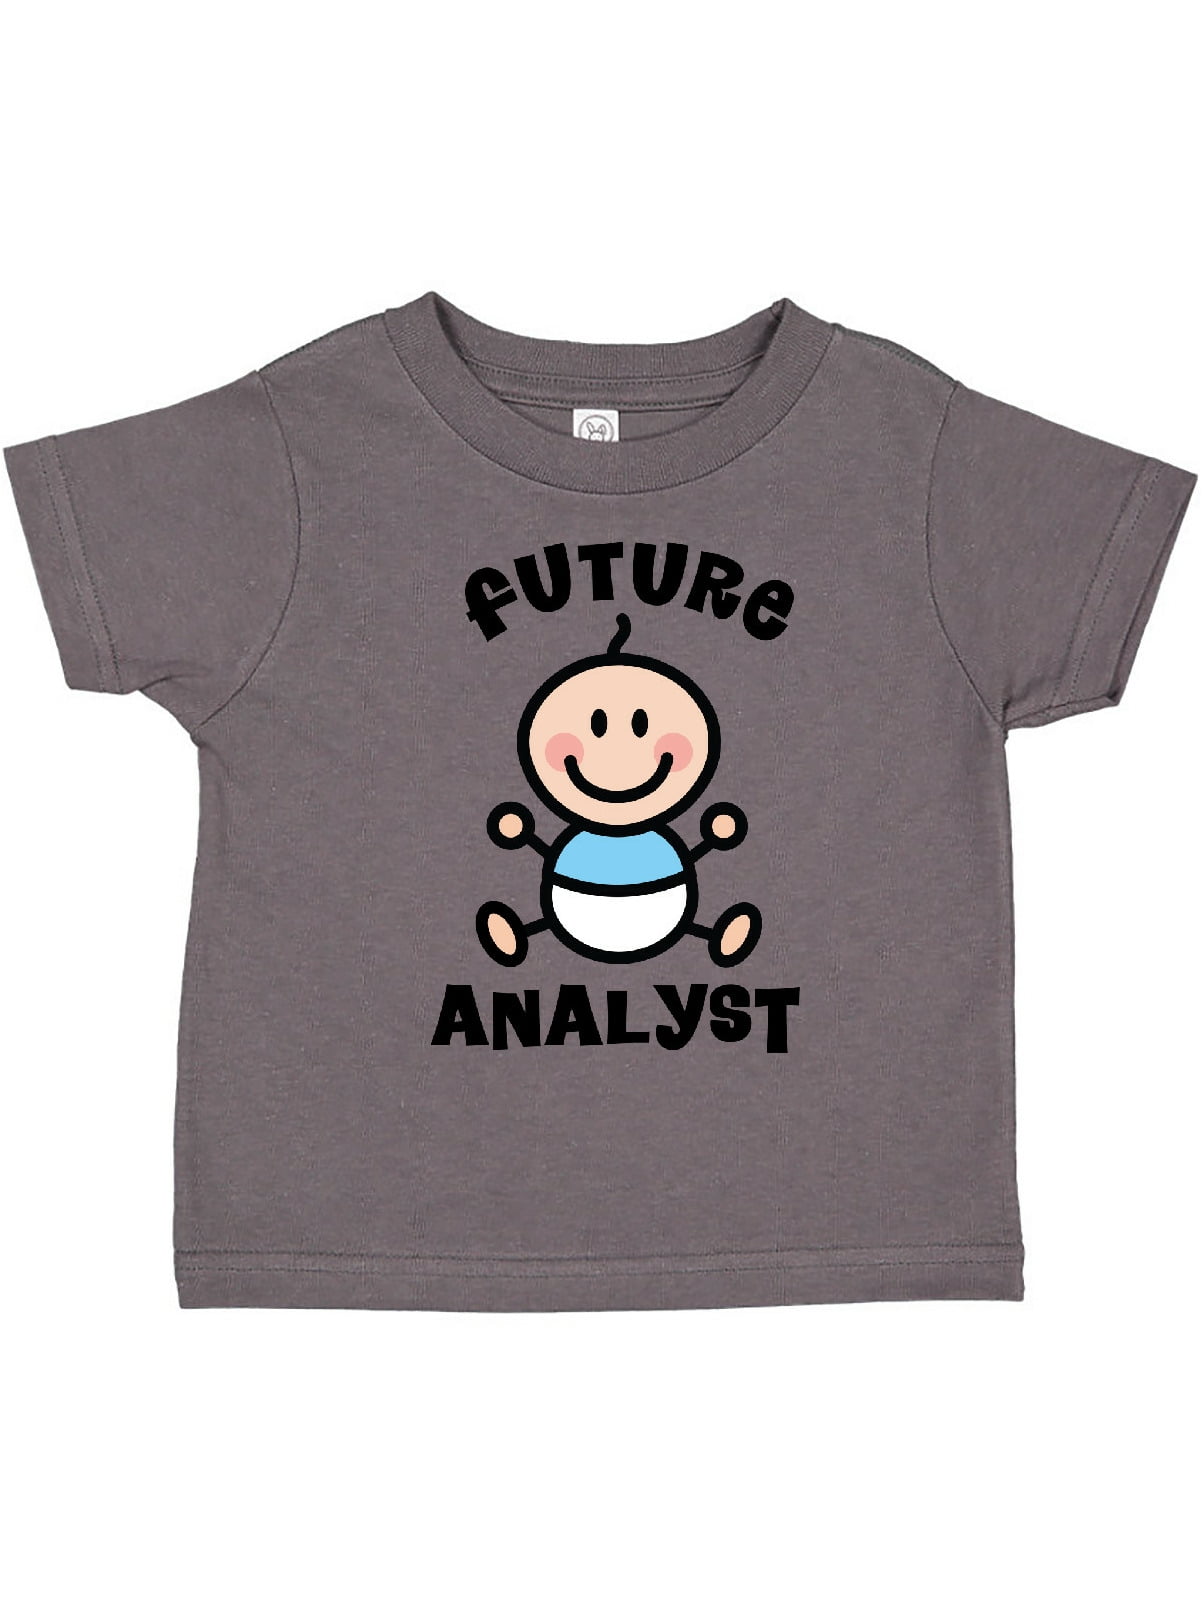 inktastic Future Energy Analyst Baby T-Shirt 